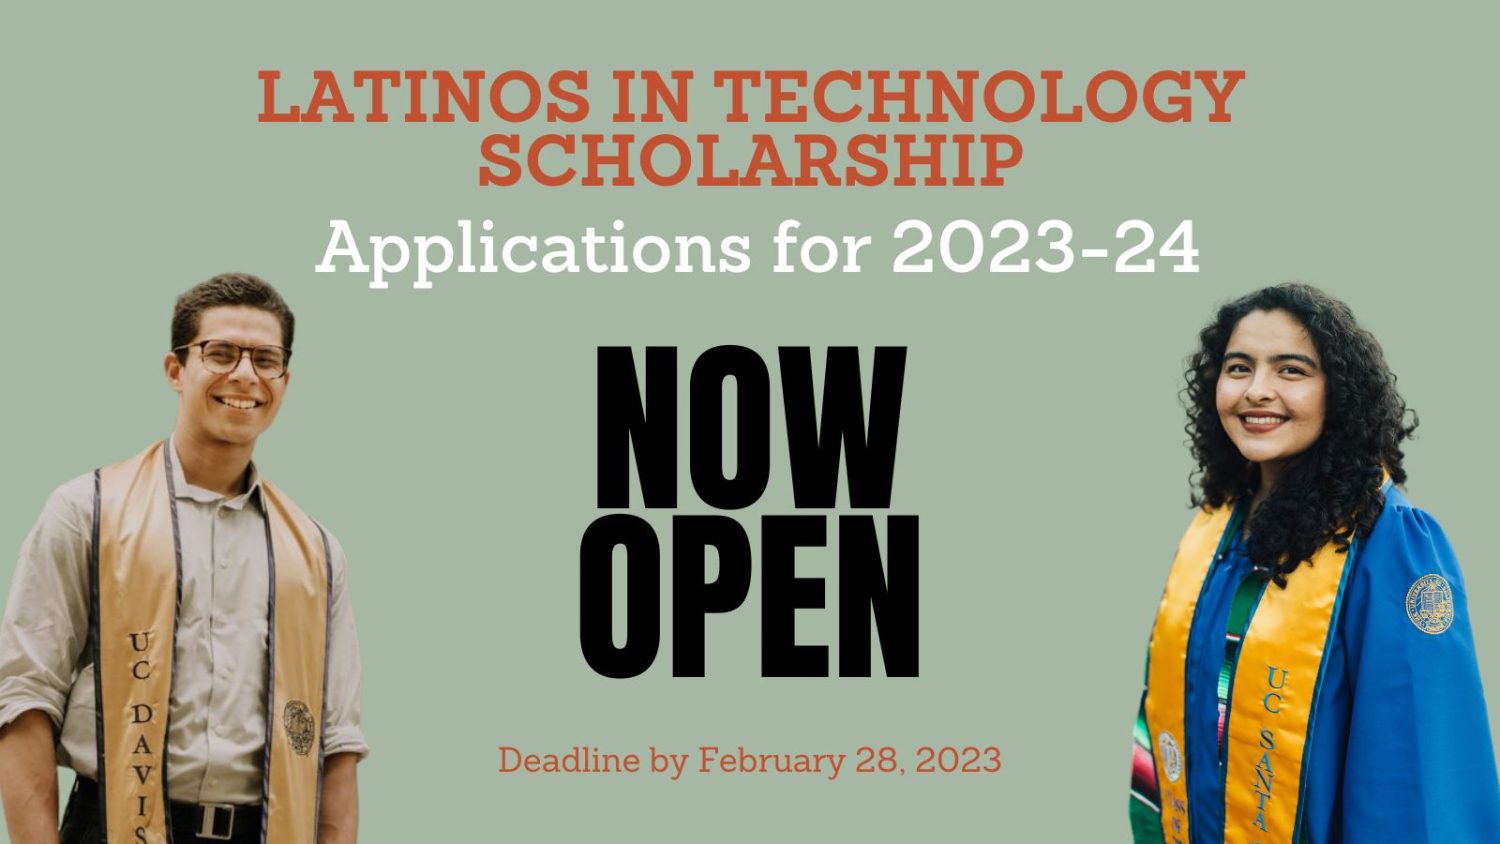 STEM scholarships for Latinos